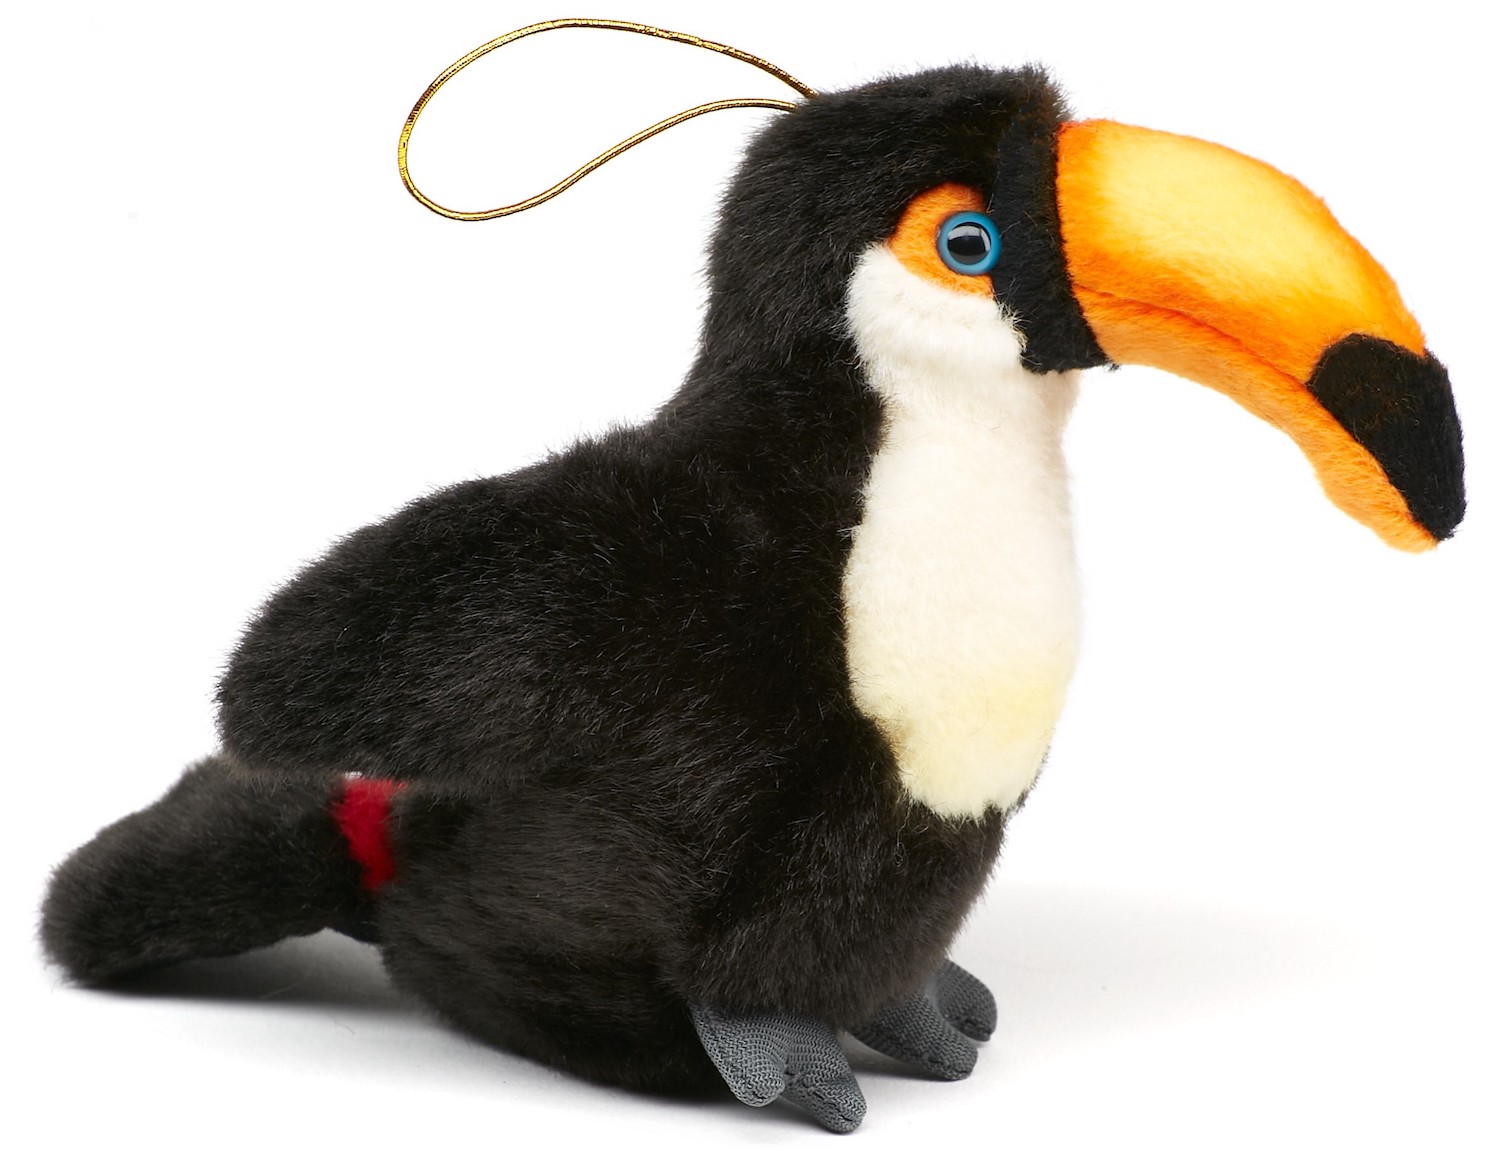  giant toucan - 13 cm (height) 